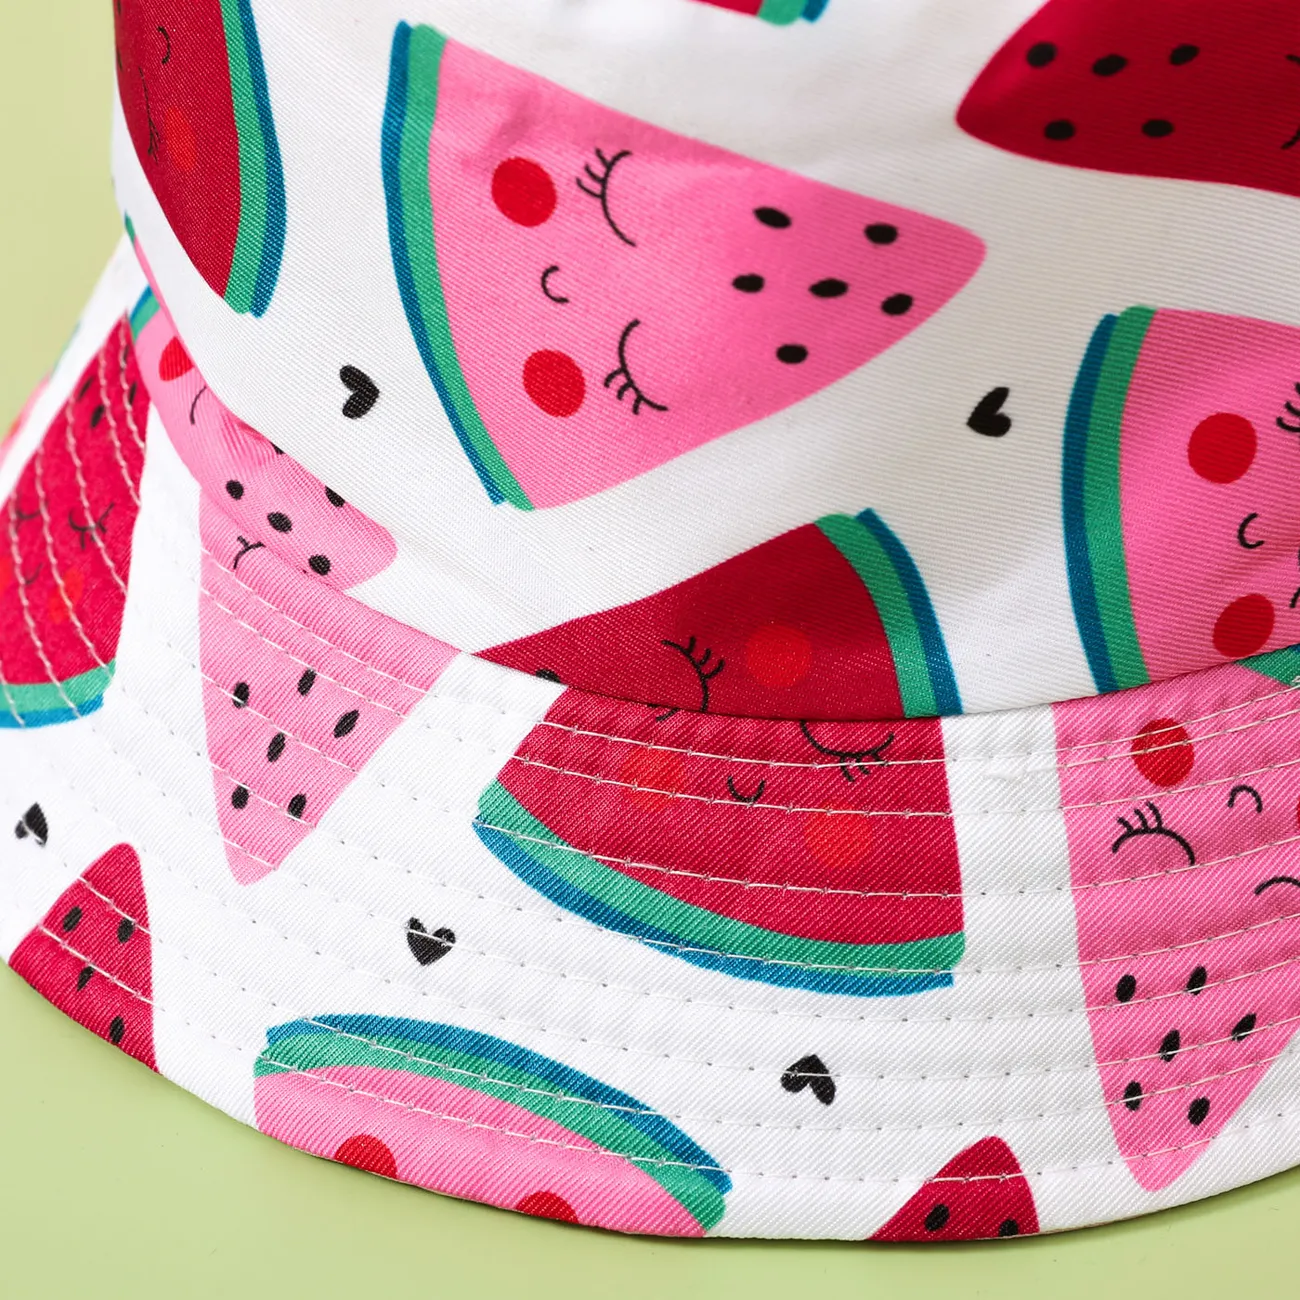 Toddler/Kid Girl Watermelon Floral Print Reversible Bucket Hat Red big image 1